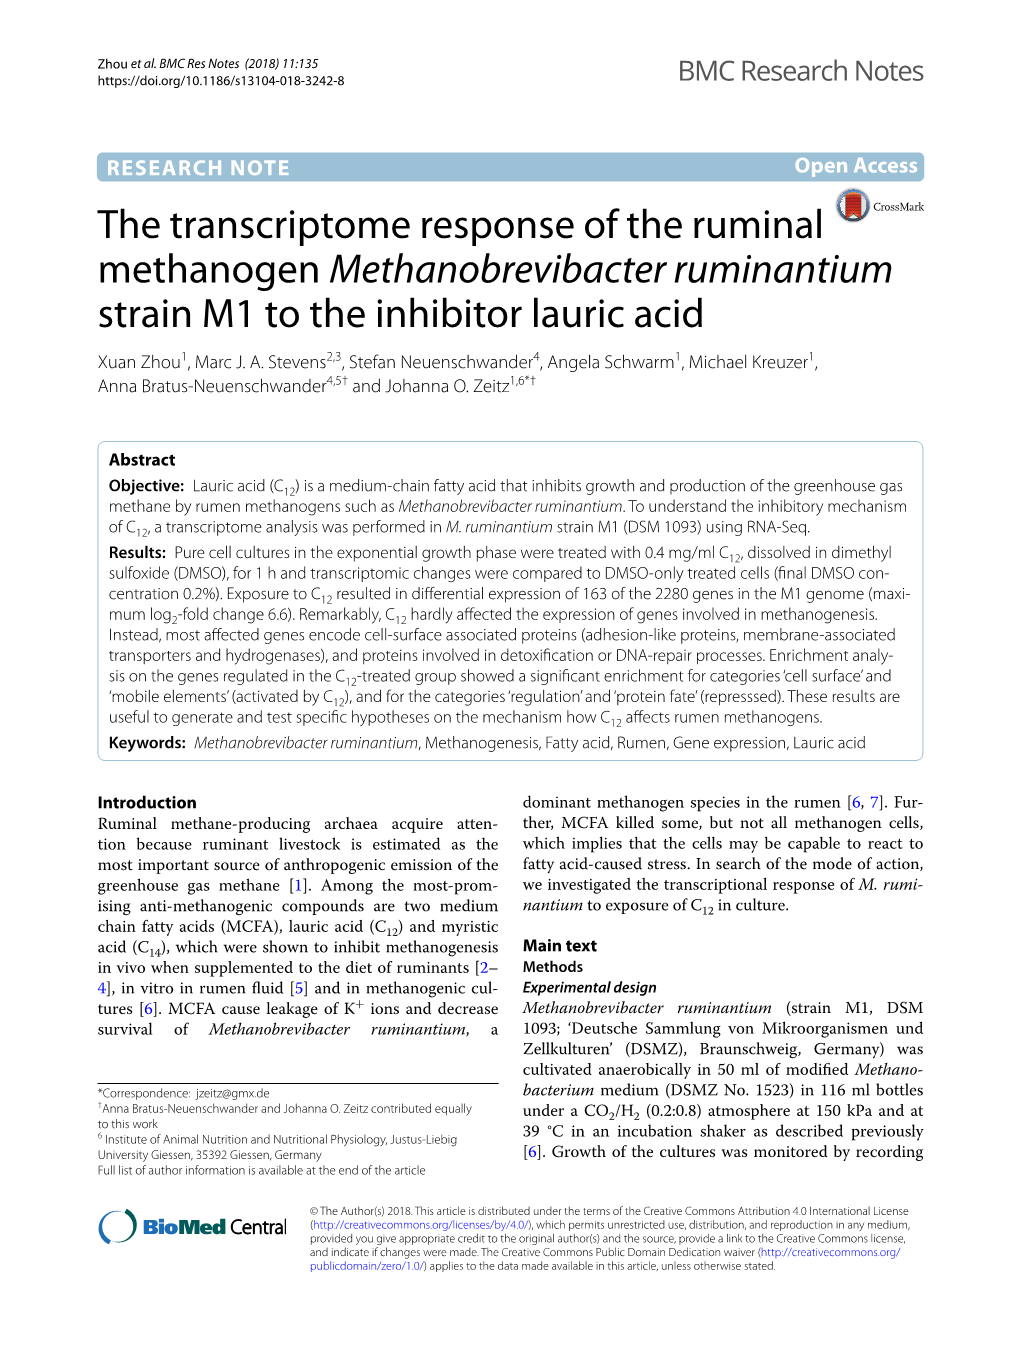 The Transcriptome Response of the Ruminal Methanogen Methanobrevibacter Ruminantium Strain M1 to the Inhibitor Lauric Acid Xuan Zhou1, Marc J